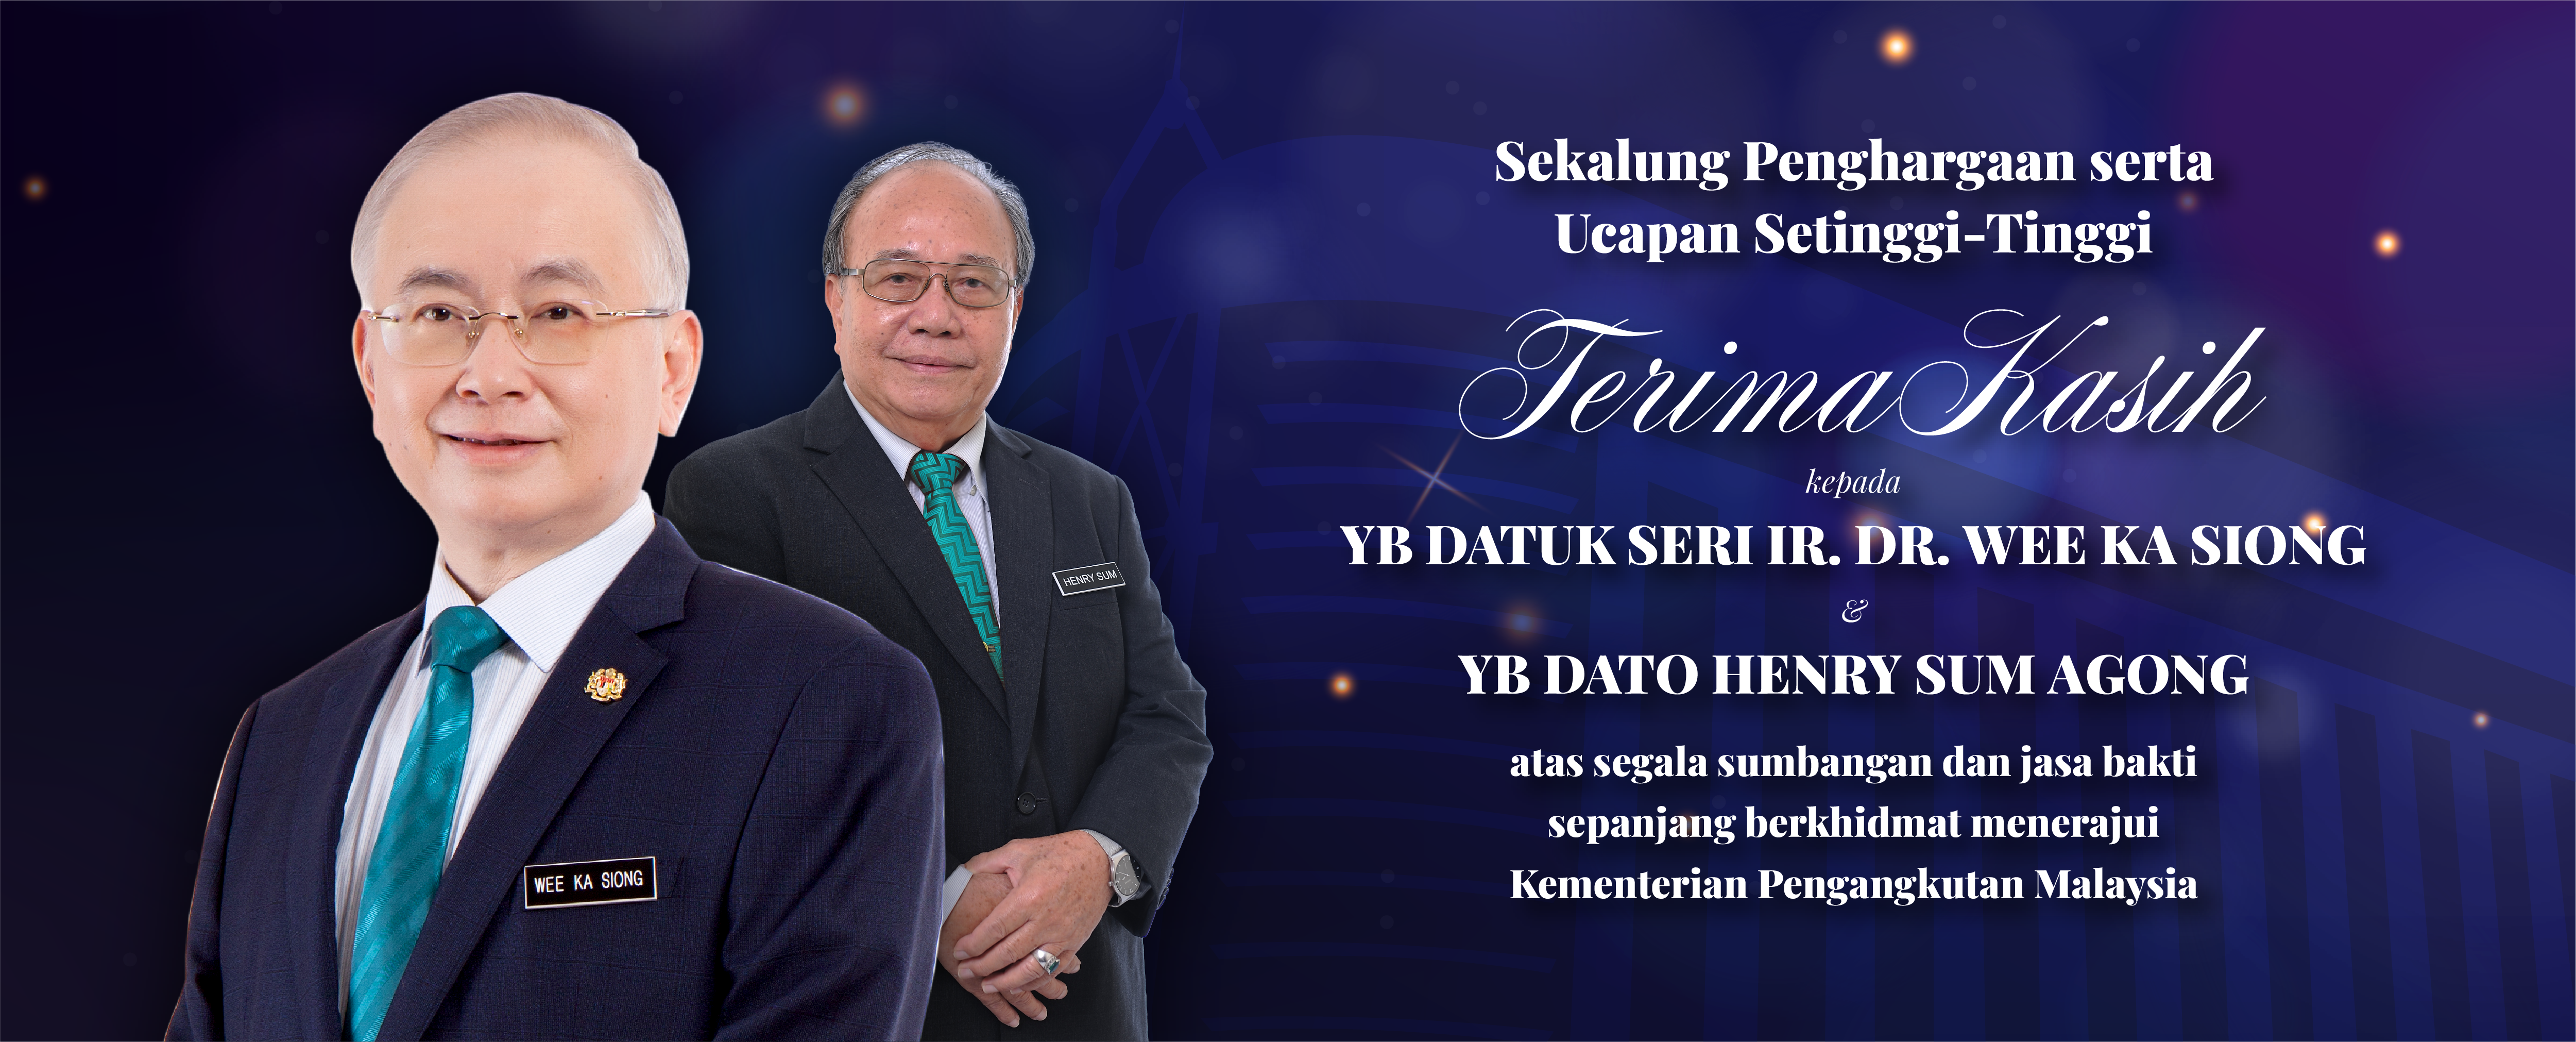 Terima kasih YB Datuk Seri Ir. Dr. Wee Ka Siong dan YB Dato Henry Sum Agong